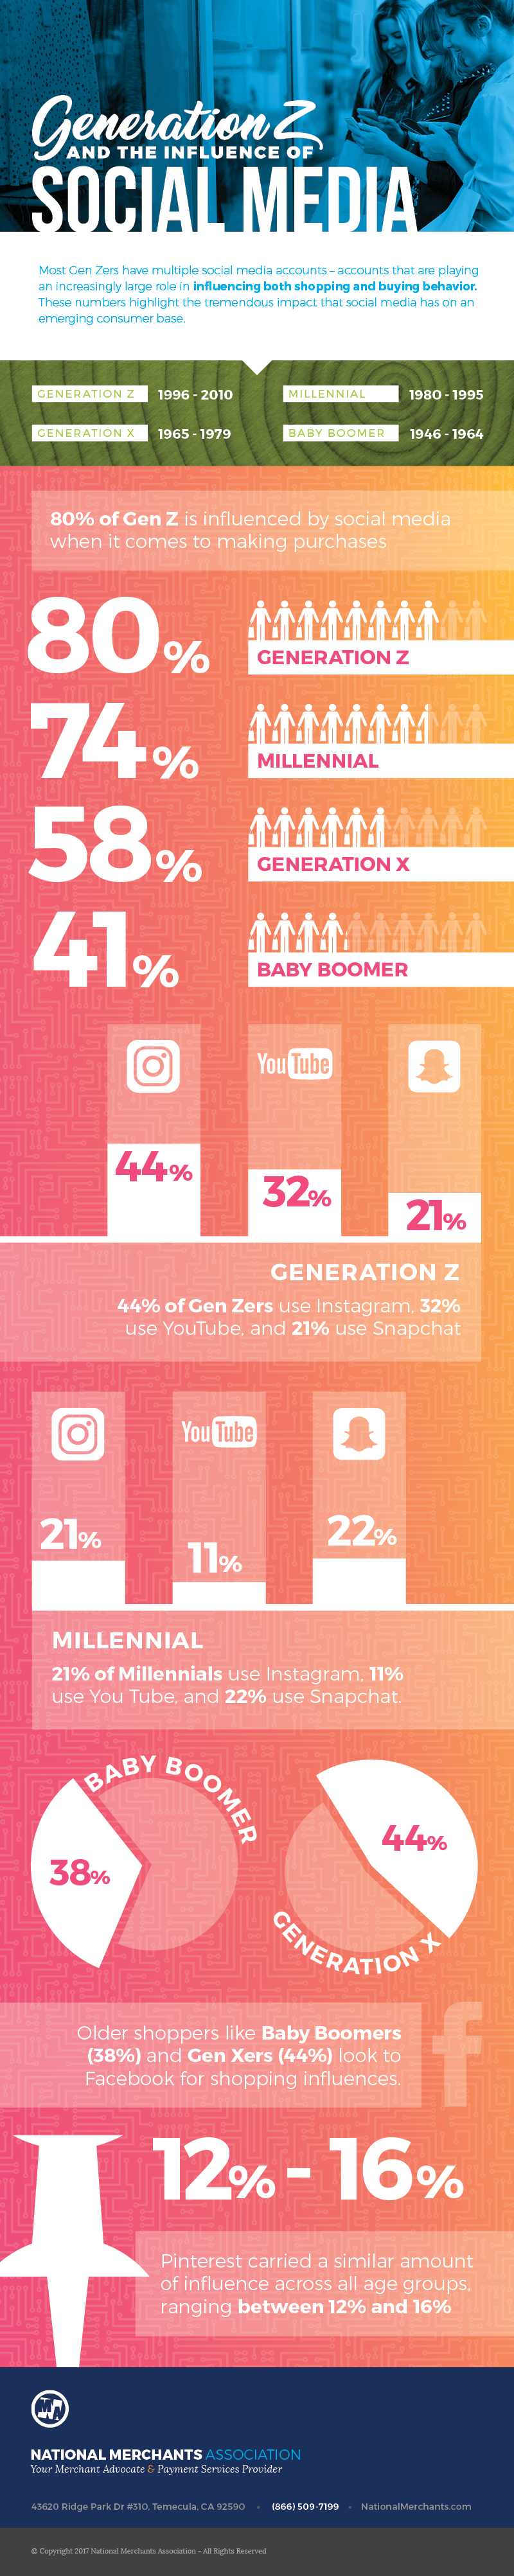 Gen Z - Social Media Infographic